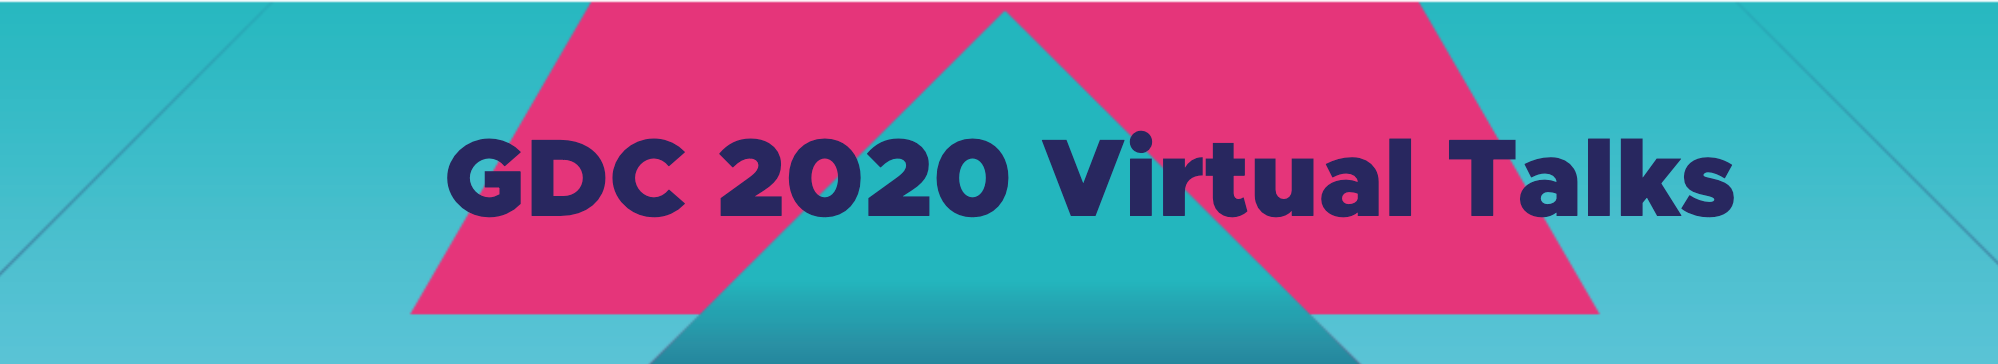 Virtual GDC 2020